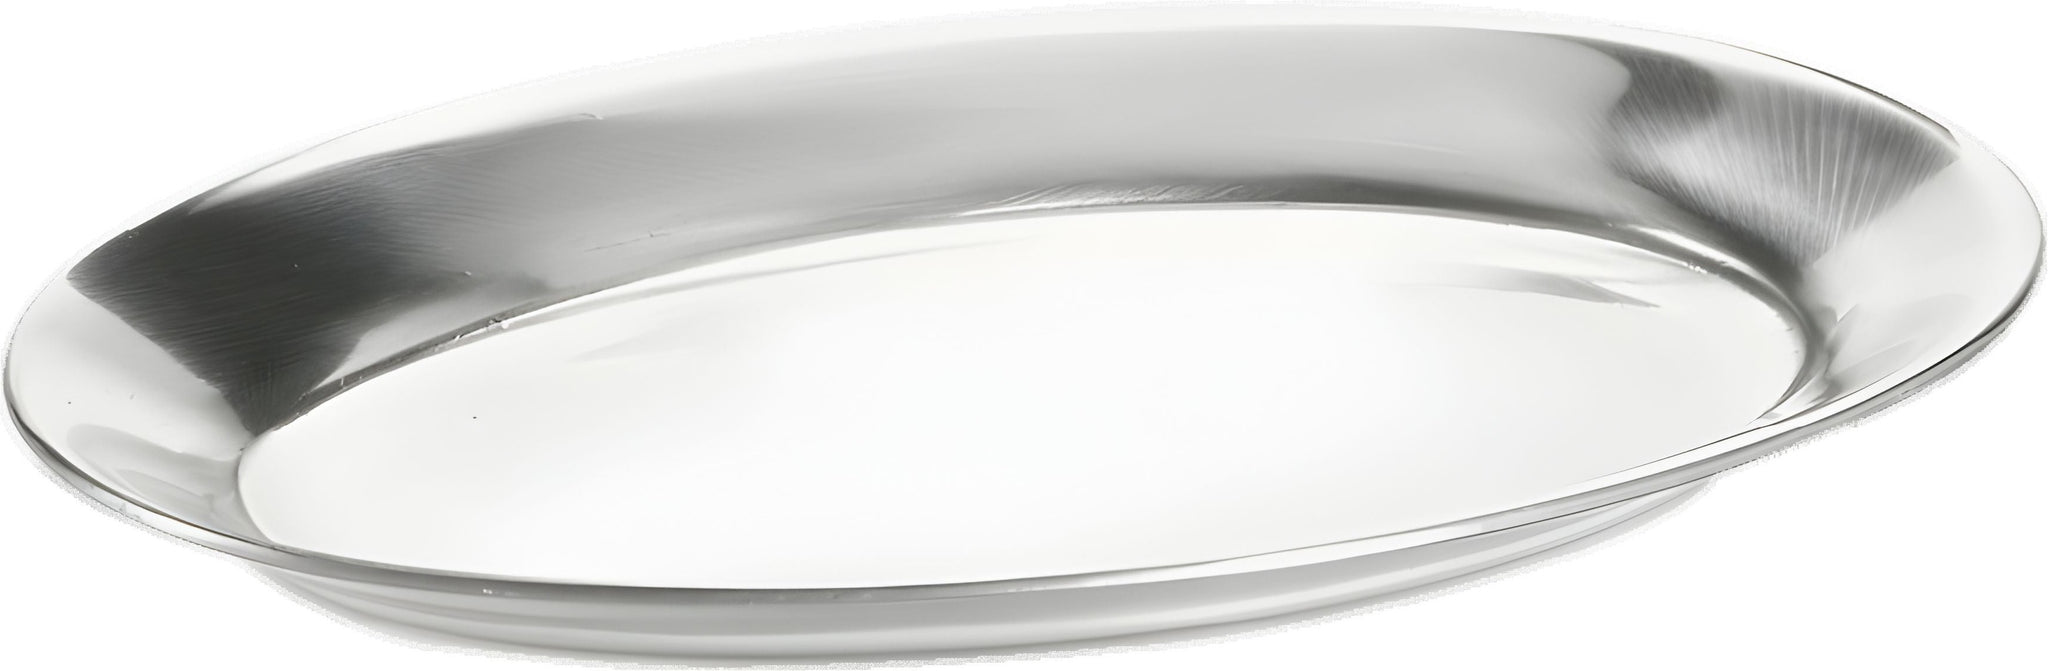 Browne - 12.5" Aluminum Sizzling Platter - 5811563